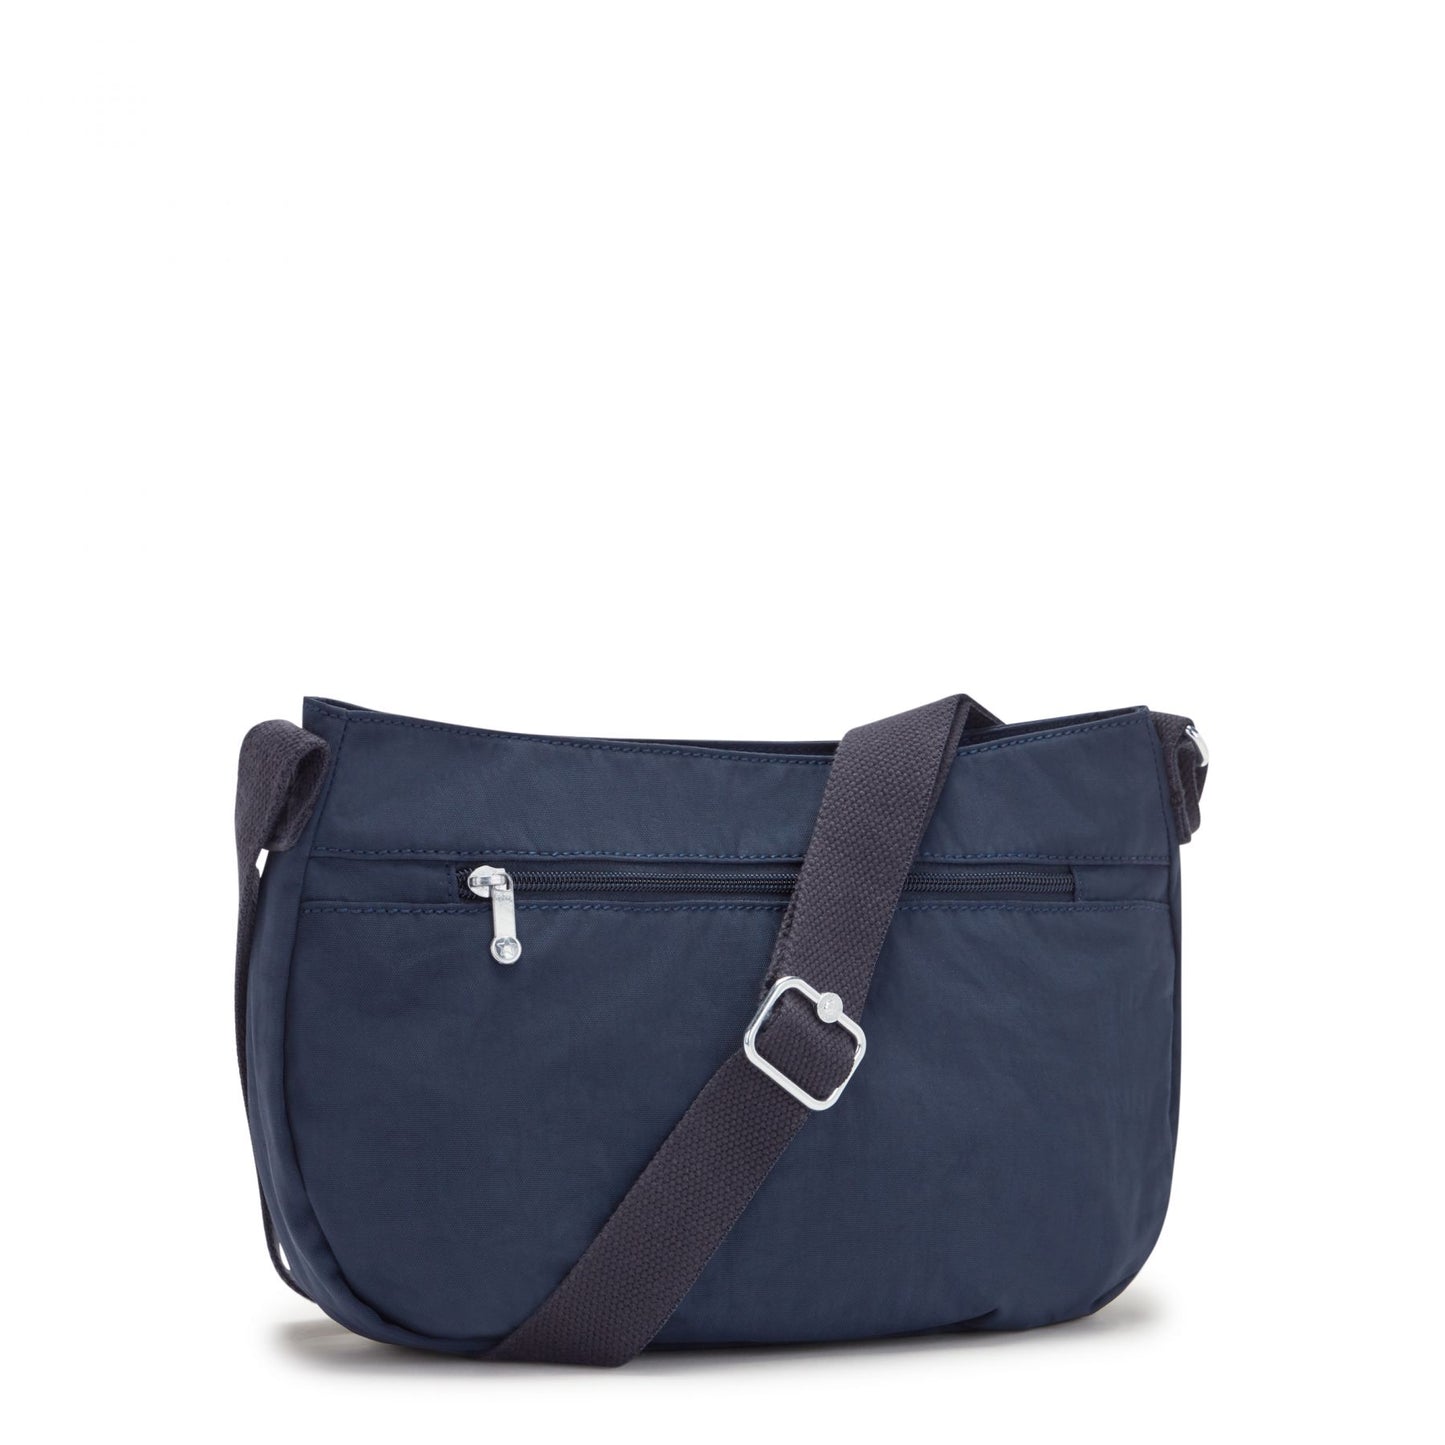 Kipling Syro Handbag in Blue Bleu